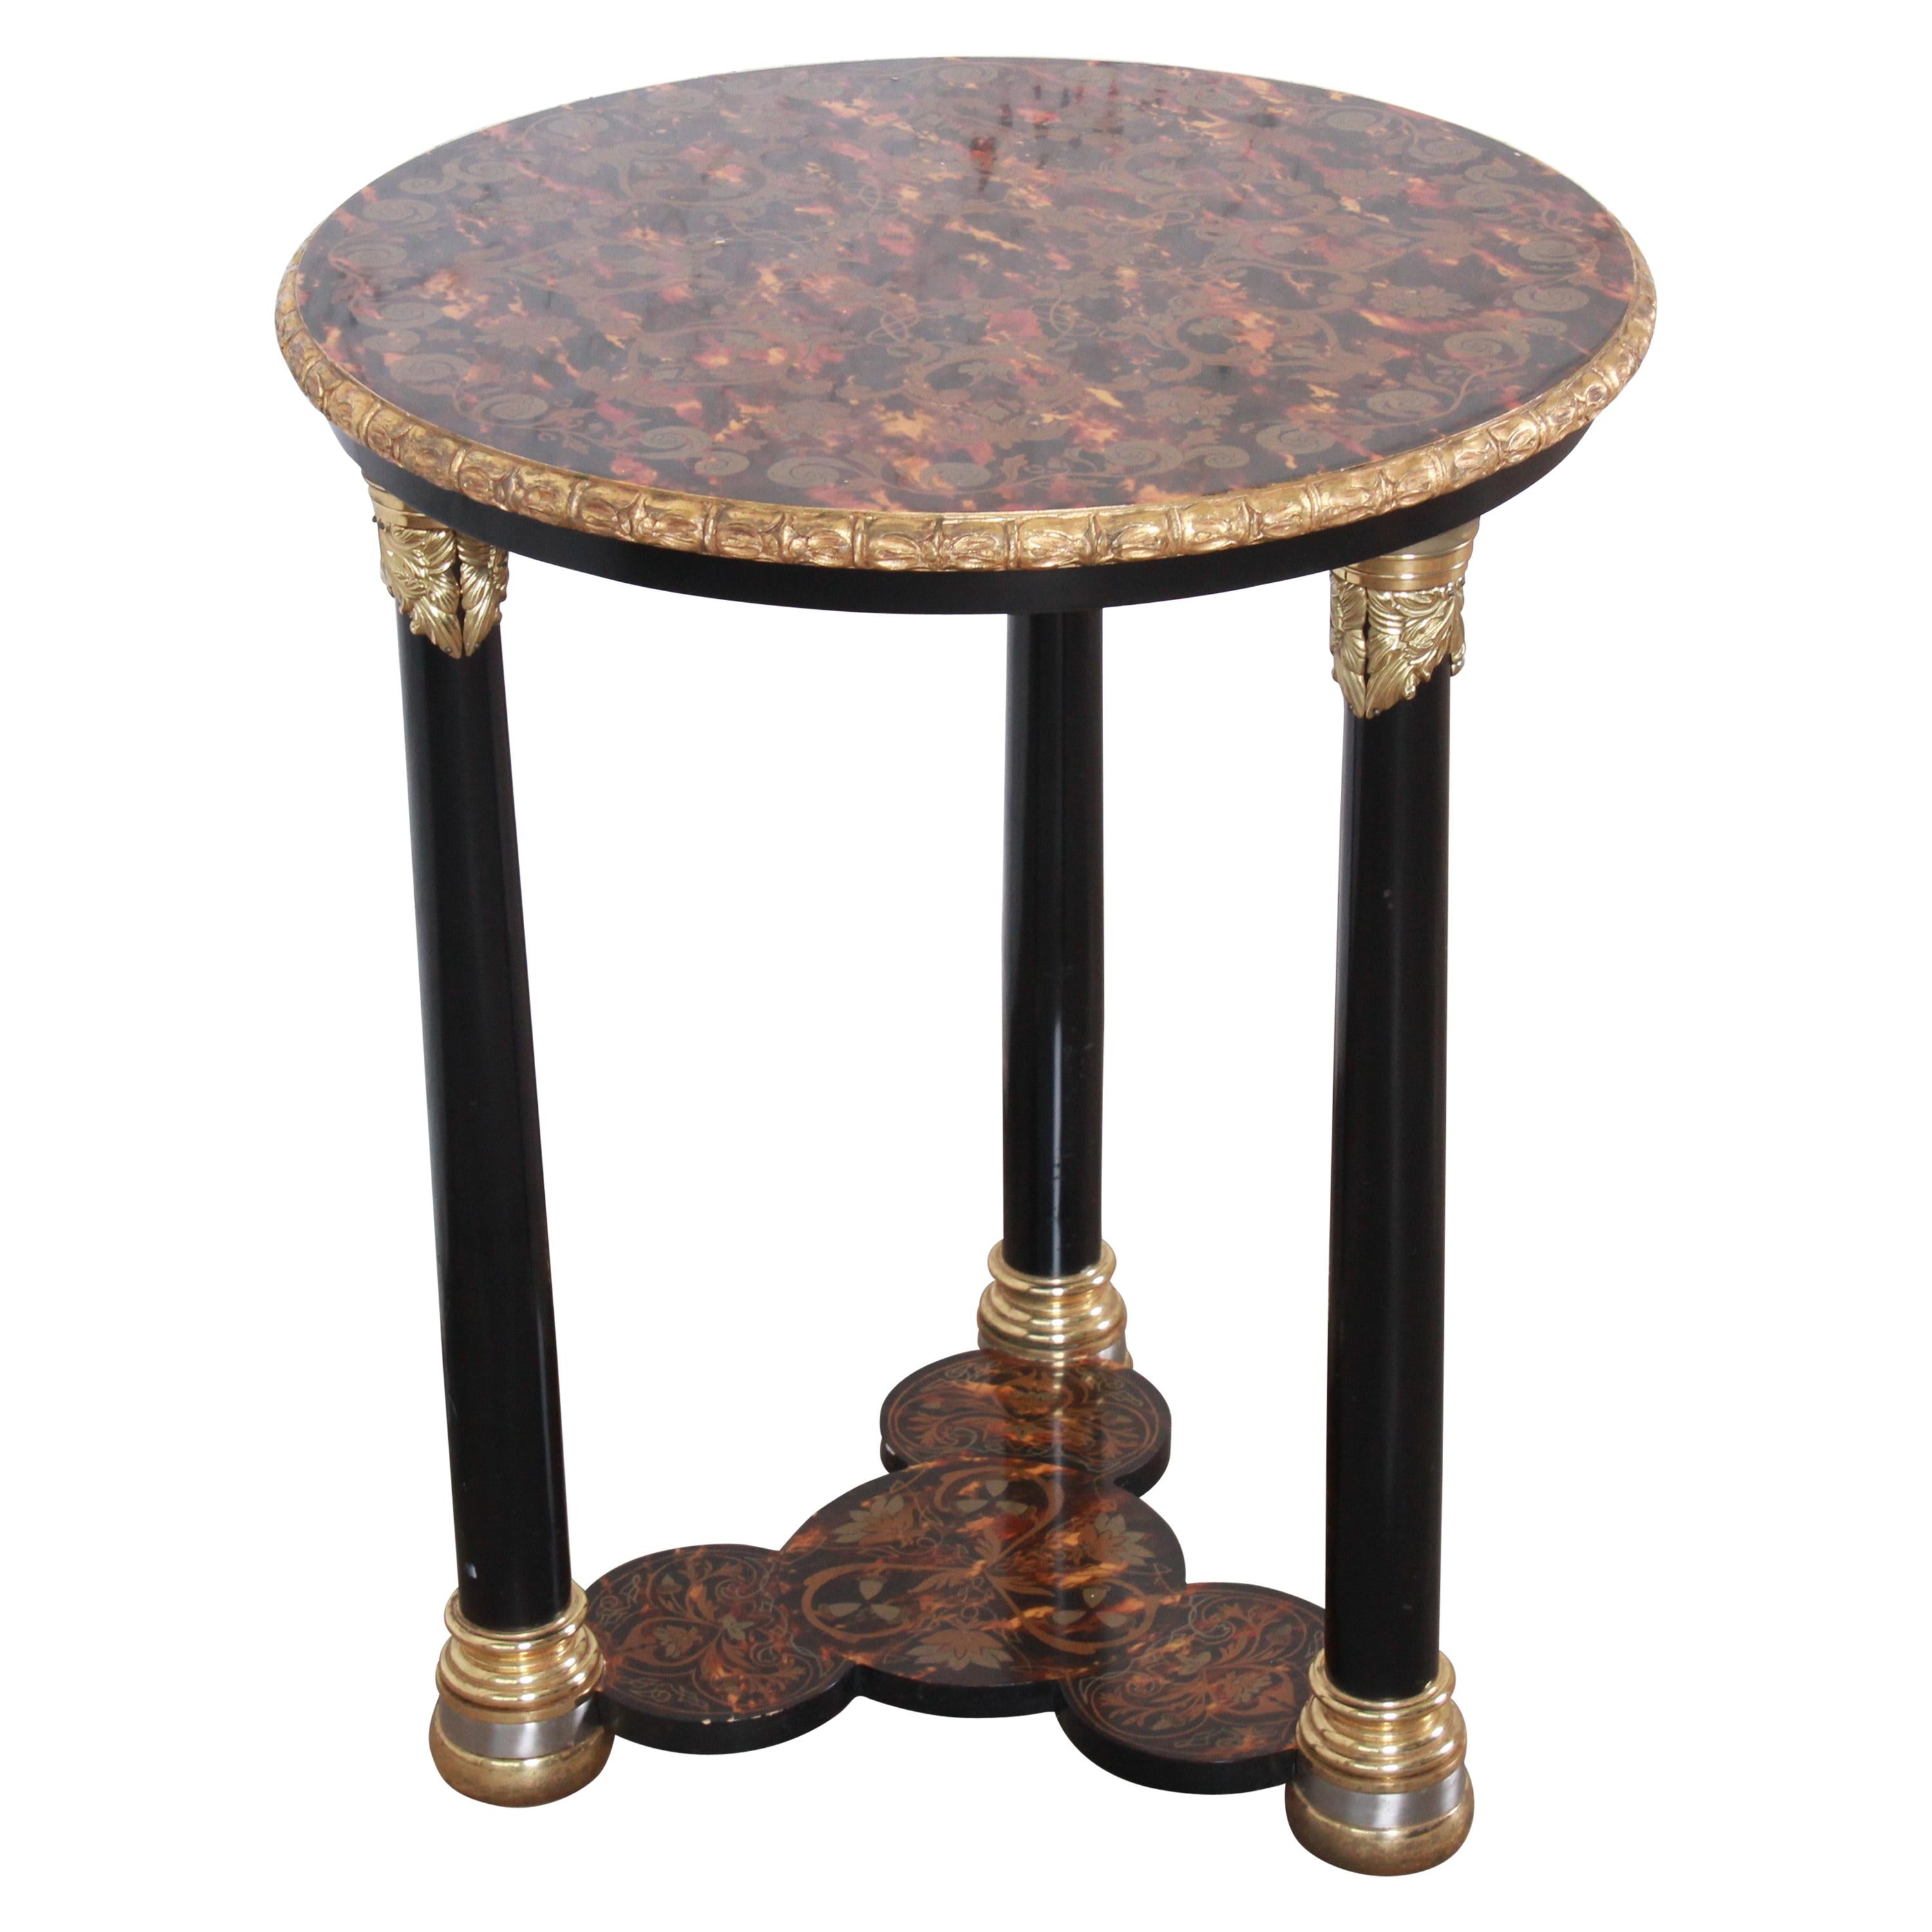 John Widdicomb Ornate Neoclassical Occasional Side Table